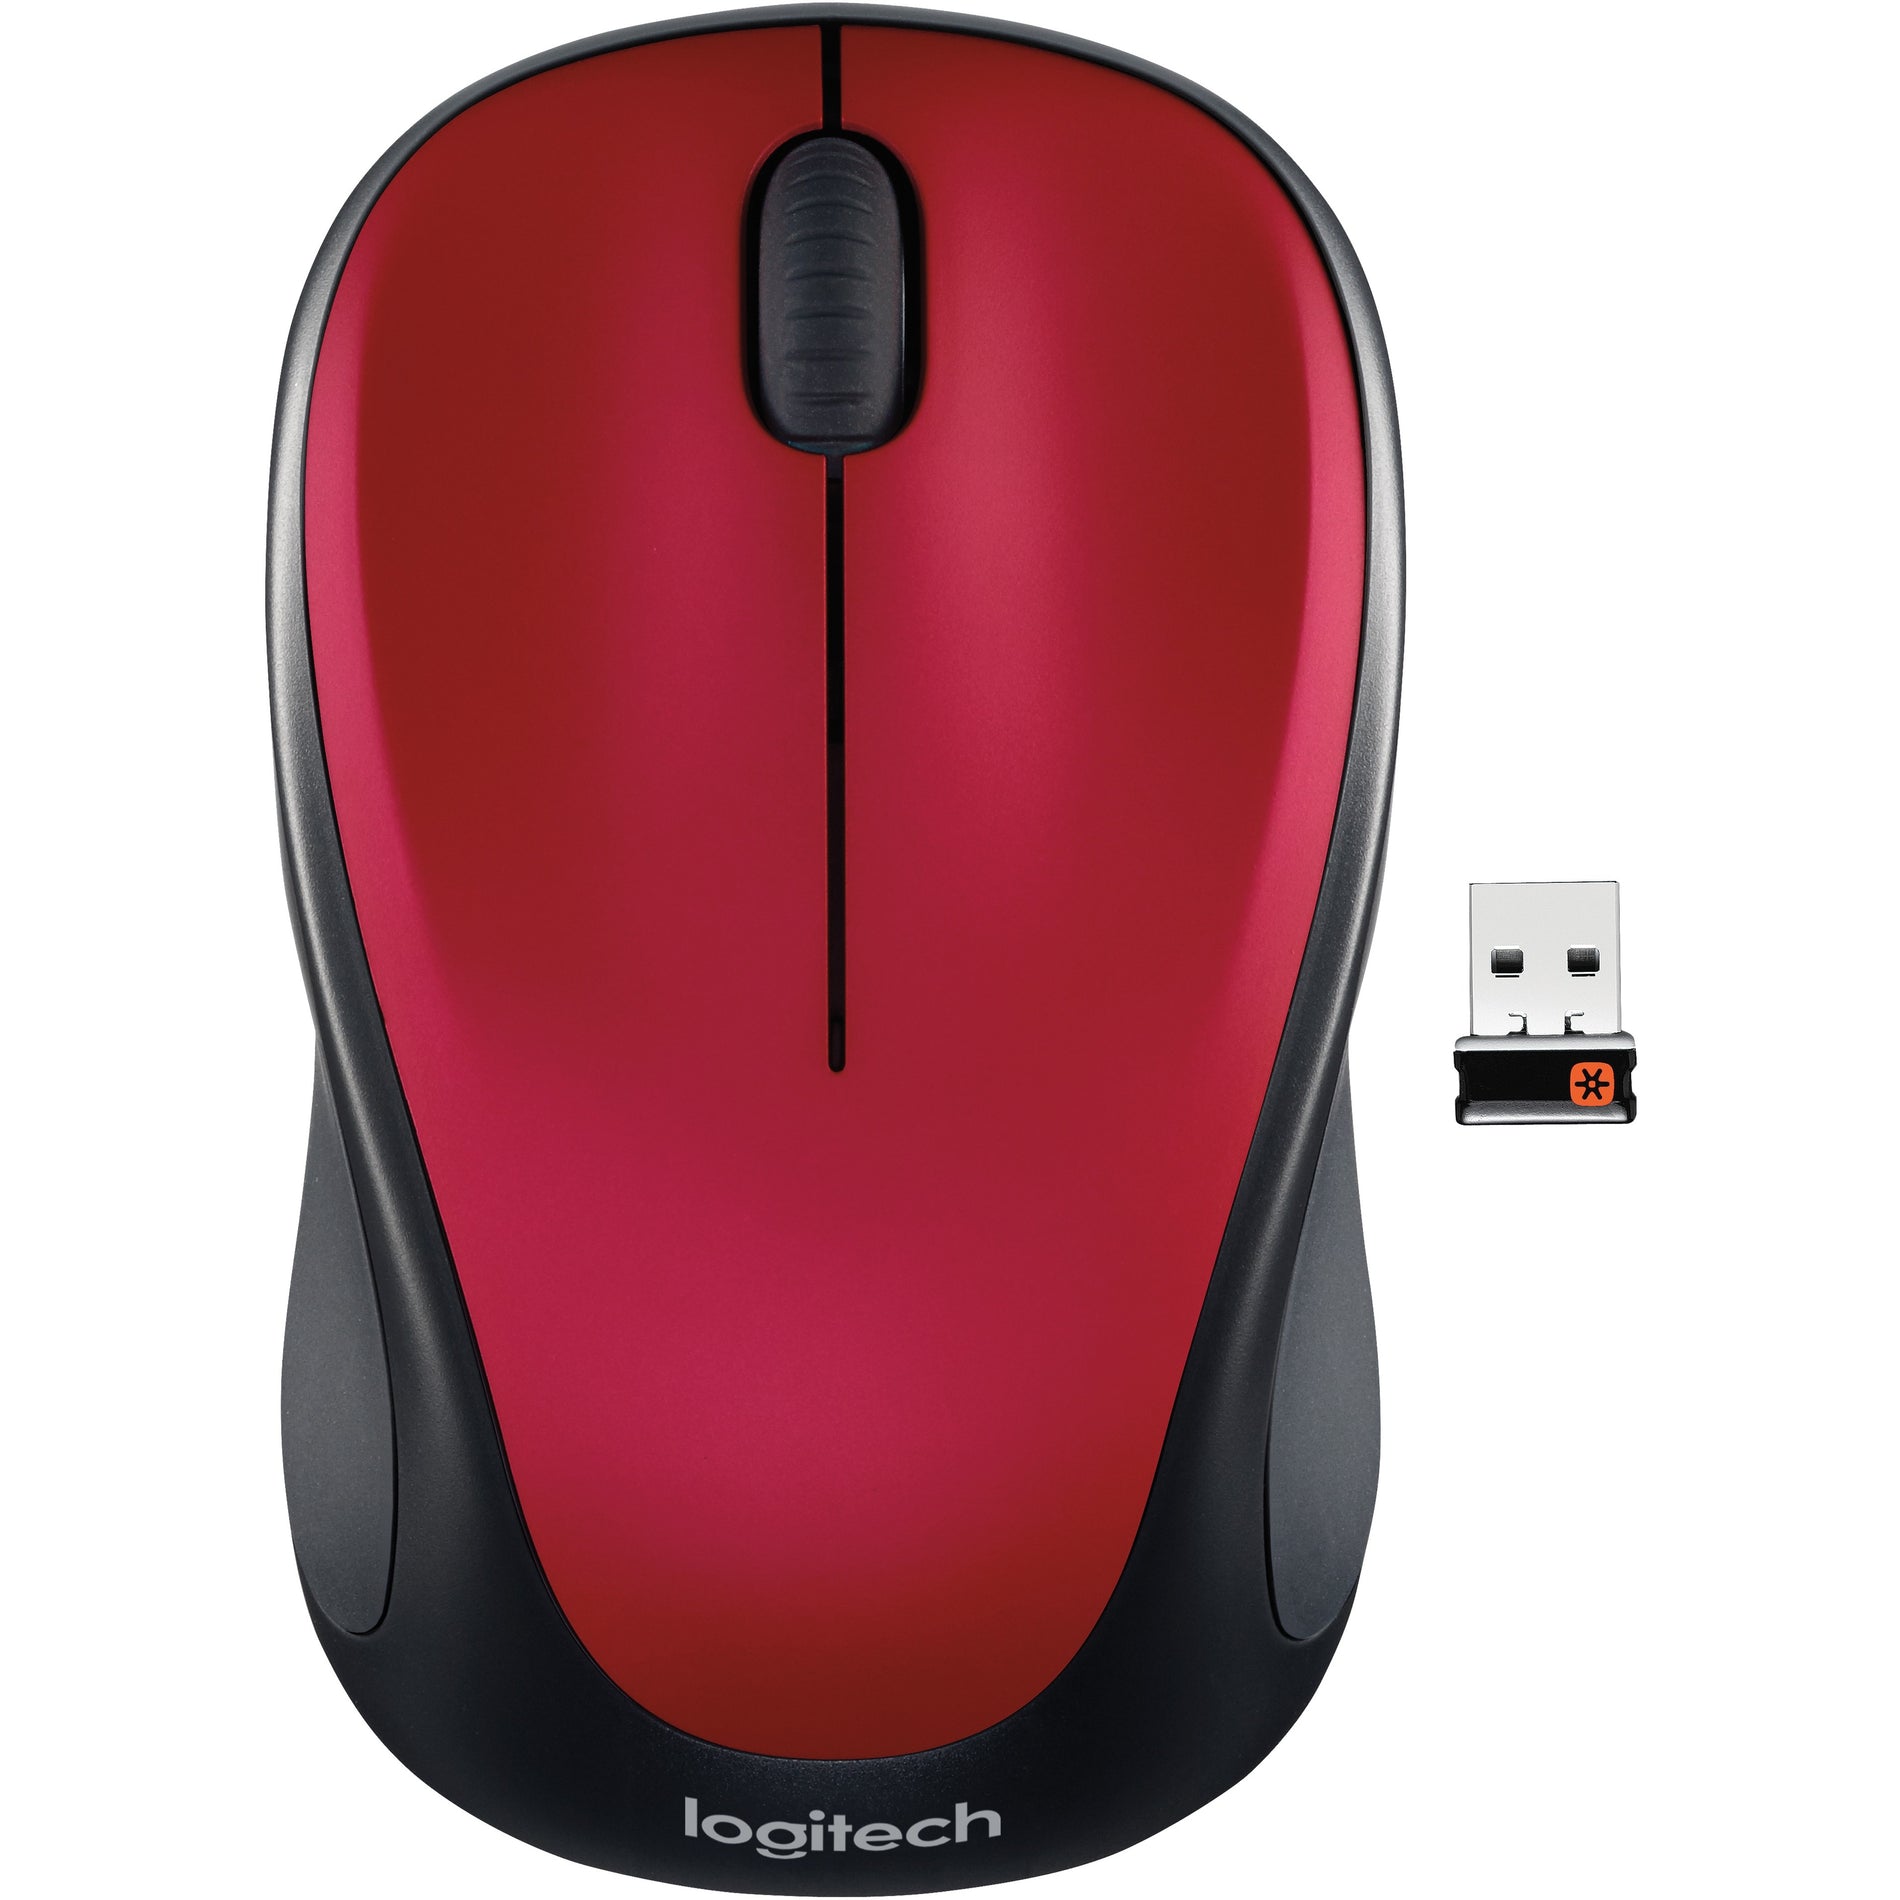 Logitech 910-002893 M317 Mouse, Wireless 2.4 GHz Optical Scroll Wheel, Red